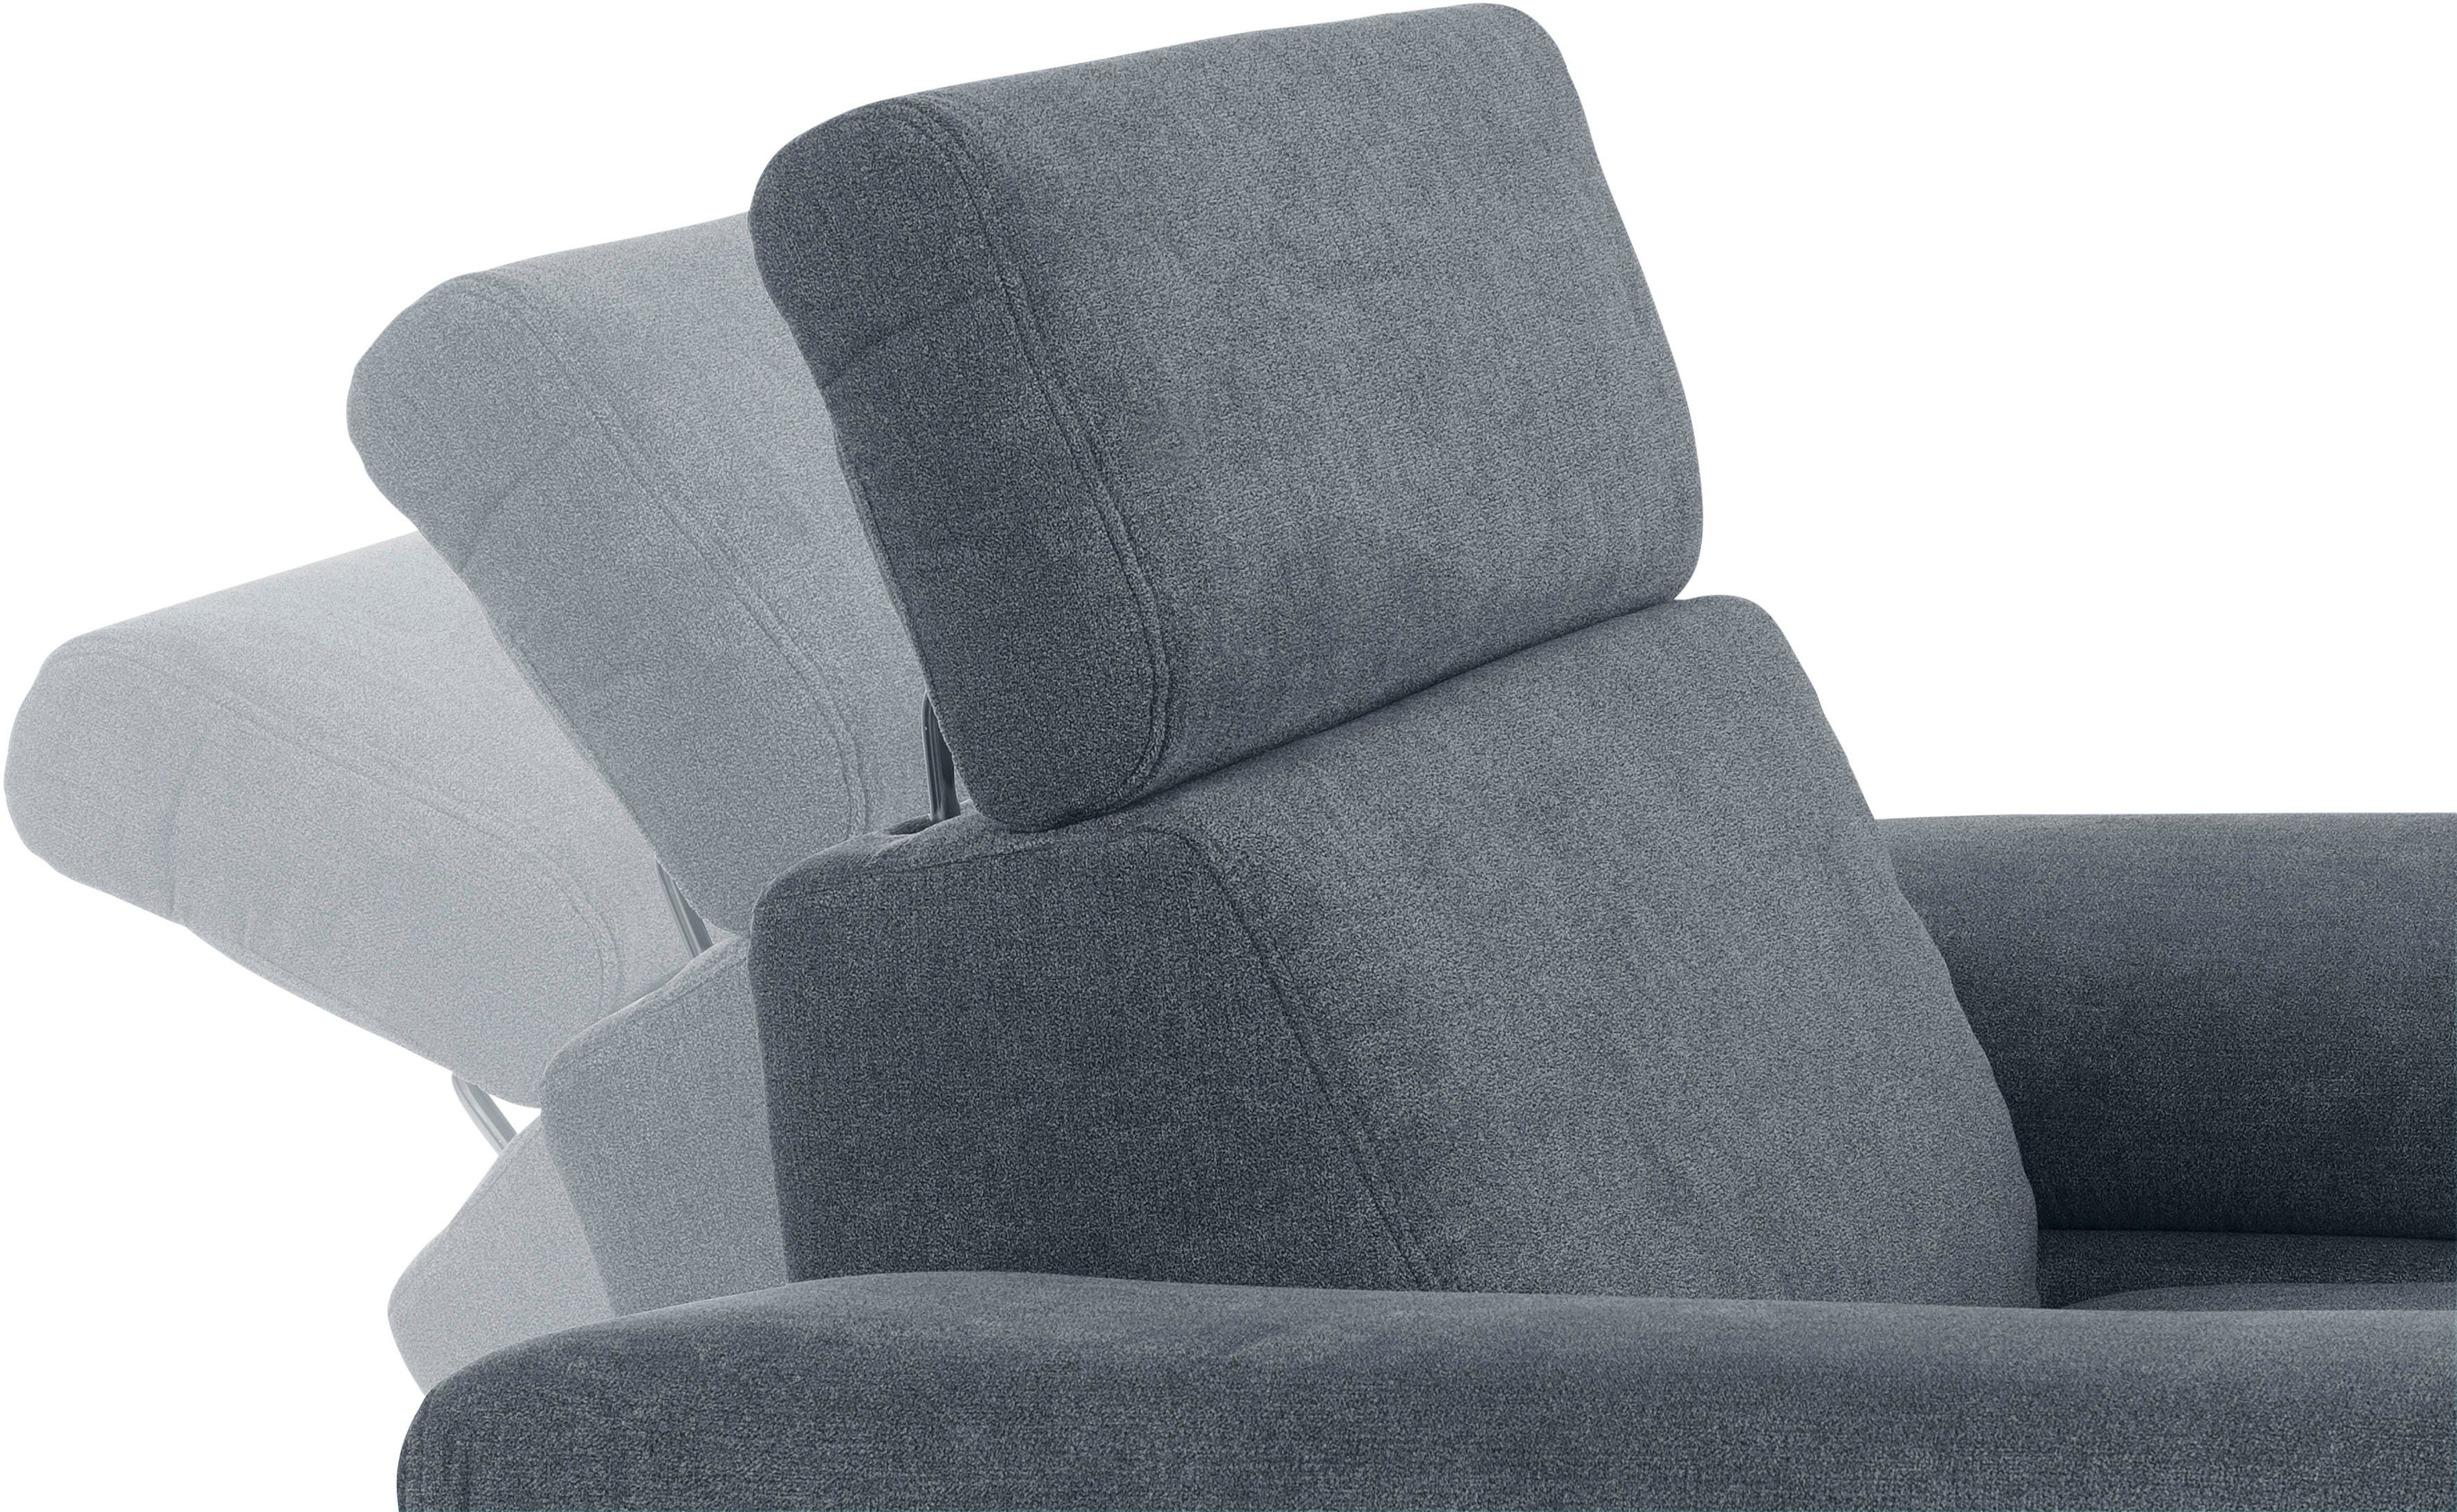 Places of Style Sessel Trapino Rückenverstellung, Lederoptik Luxus, Luxus-Microfaser mit wahlweise in